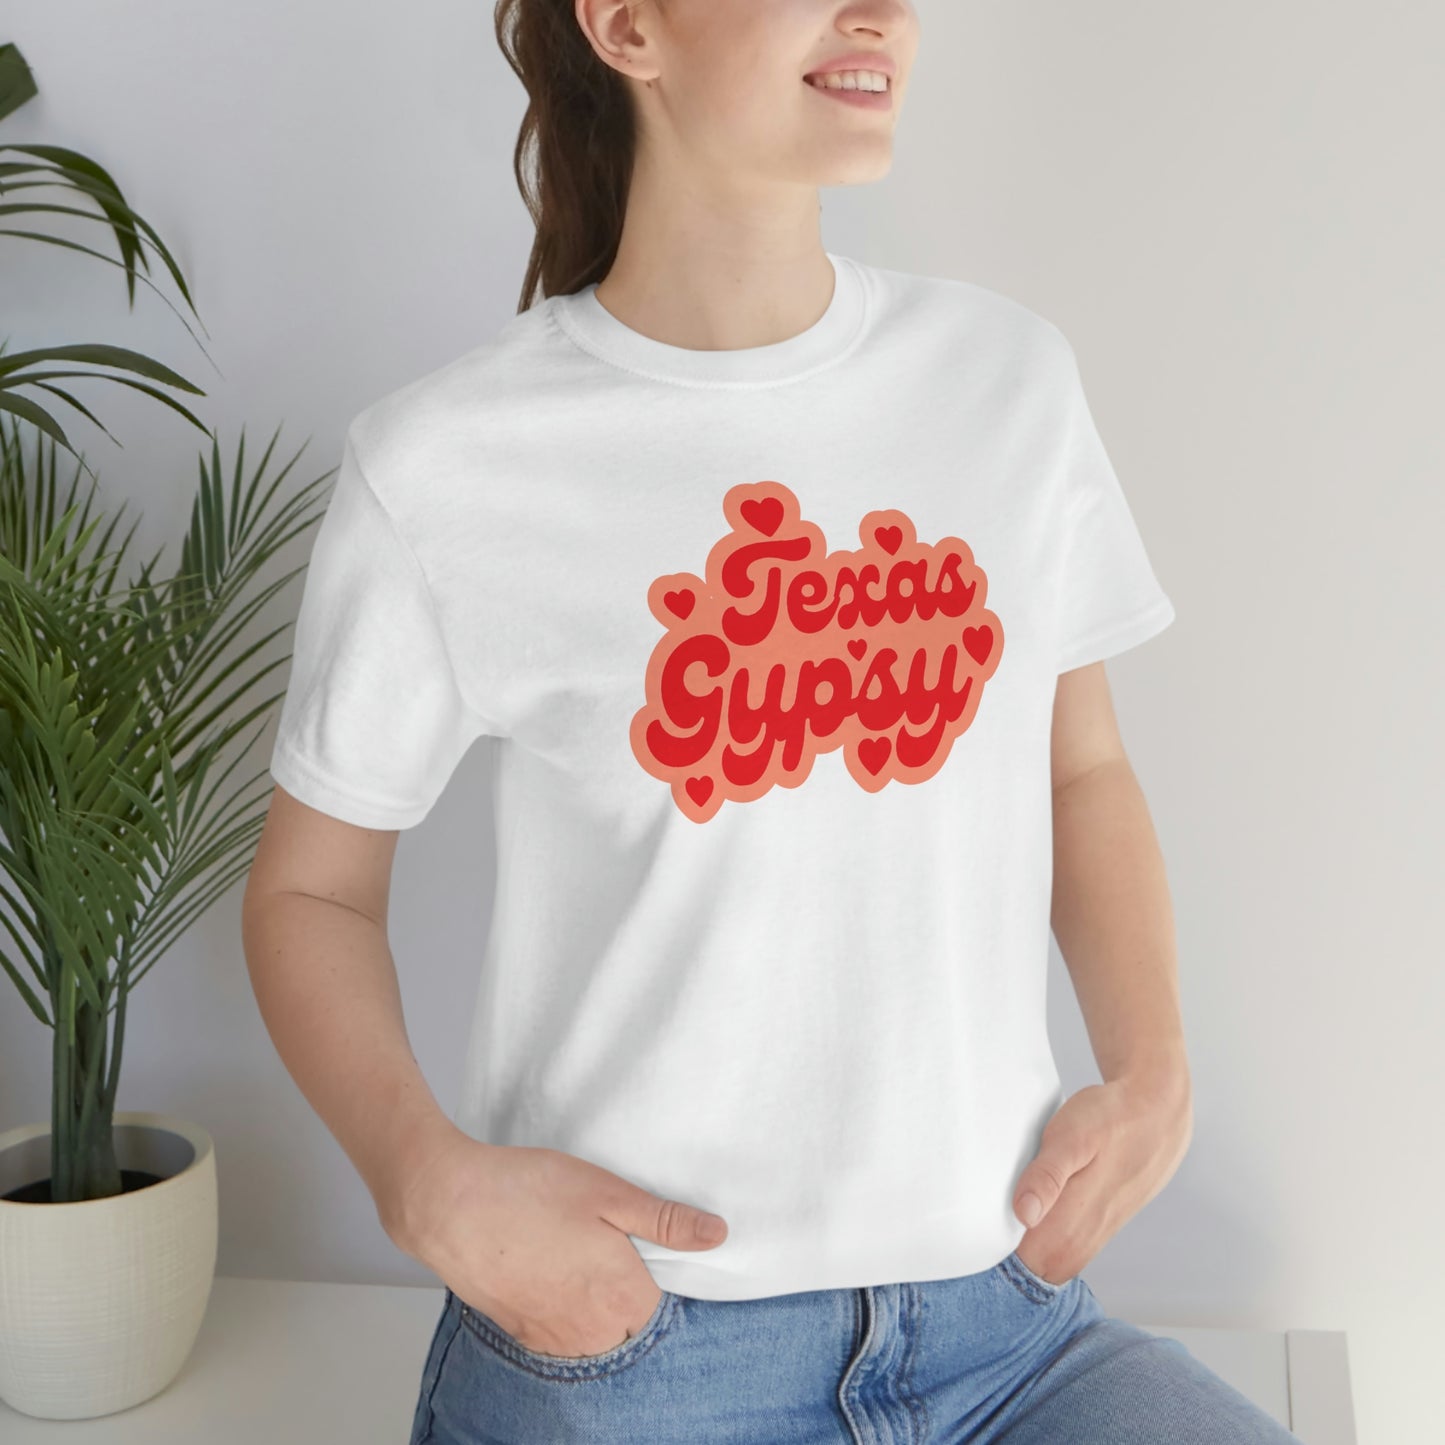 Texas Gypsy Love in T-shirt